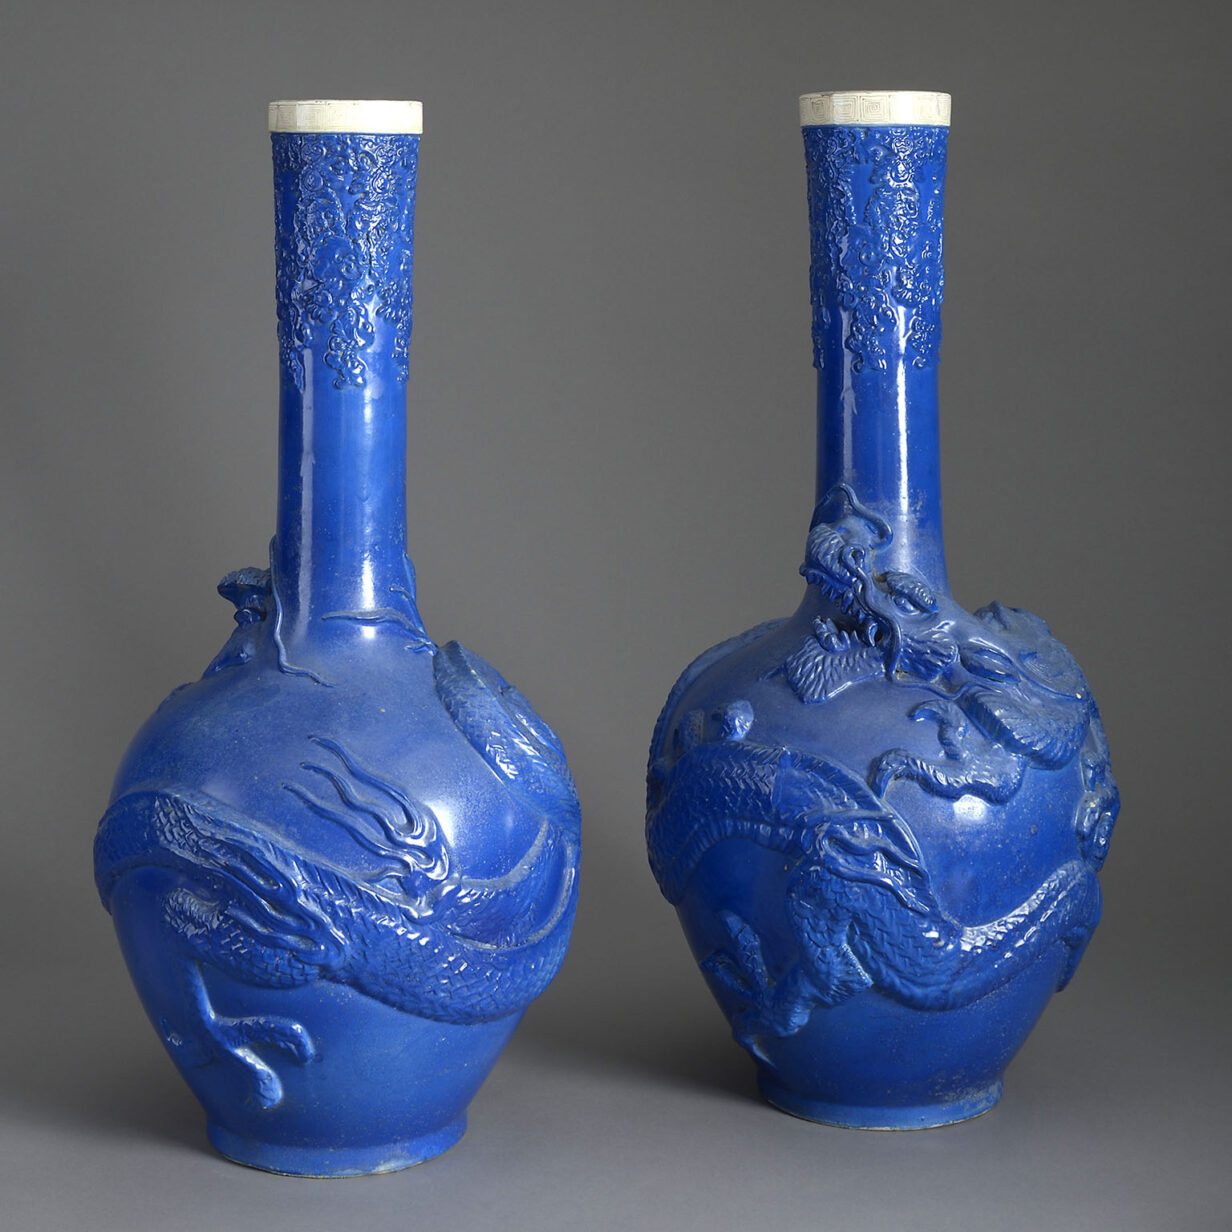 Pair of dragon vases